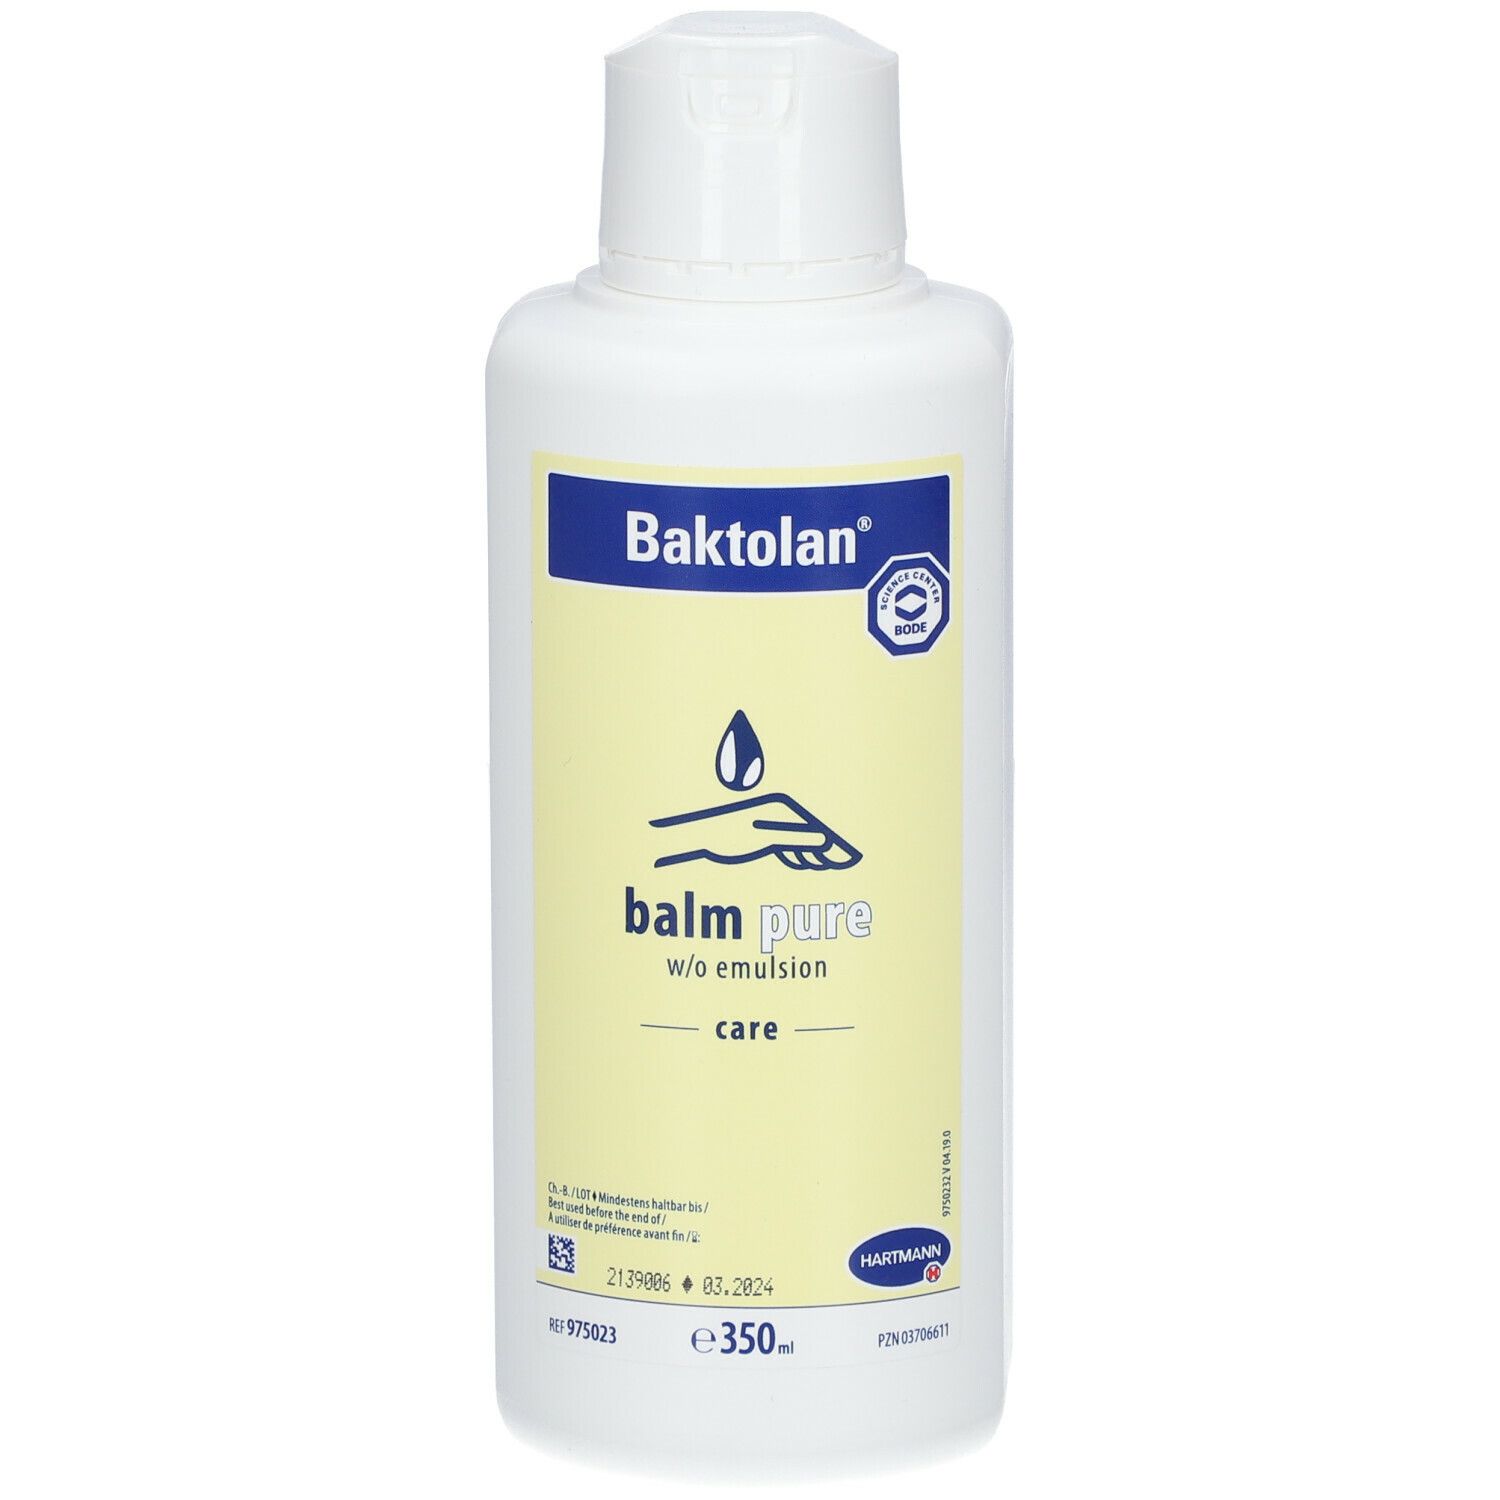 Baktolan® Balm Pure